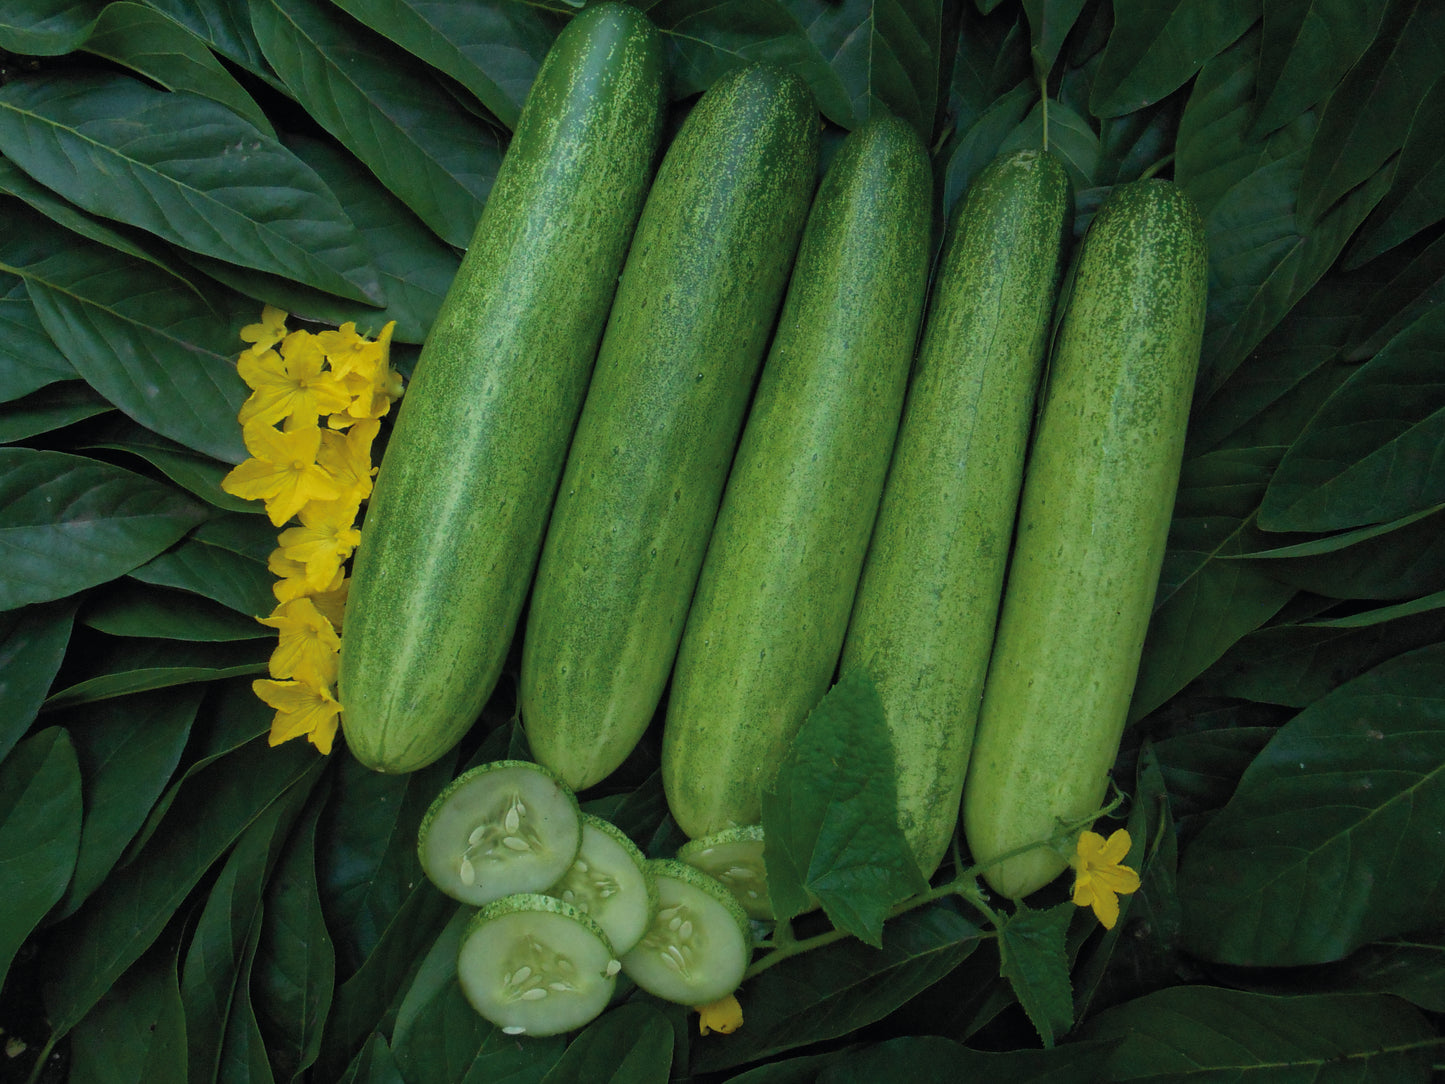 Hm Clause Damini F1 Hybrid Cucumber Seed